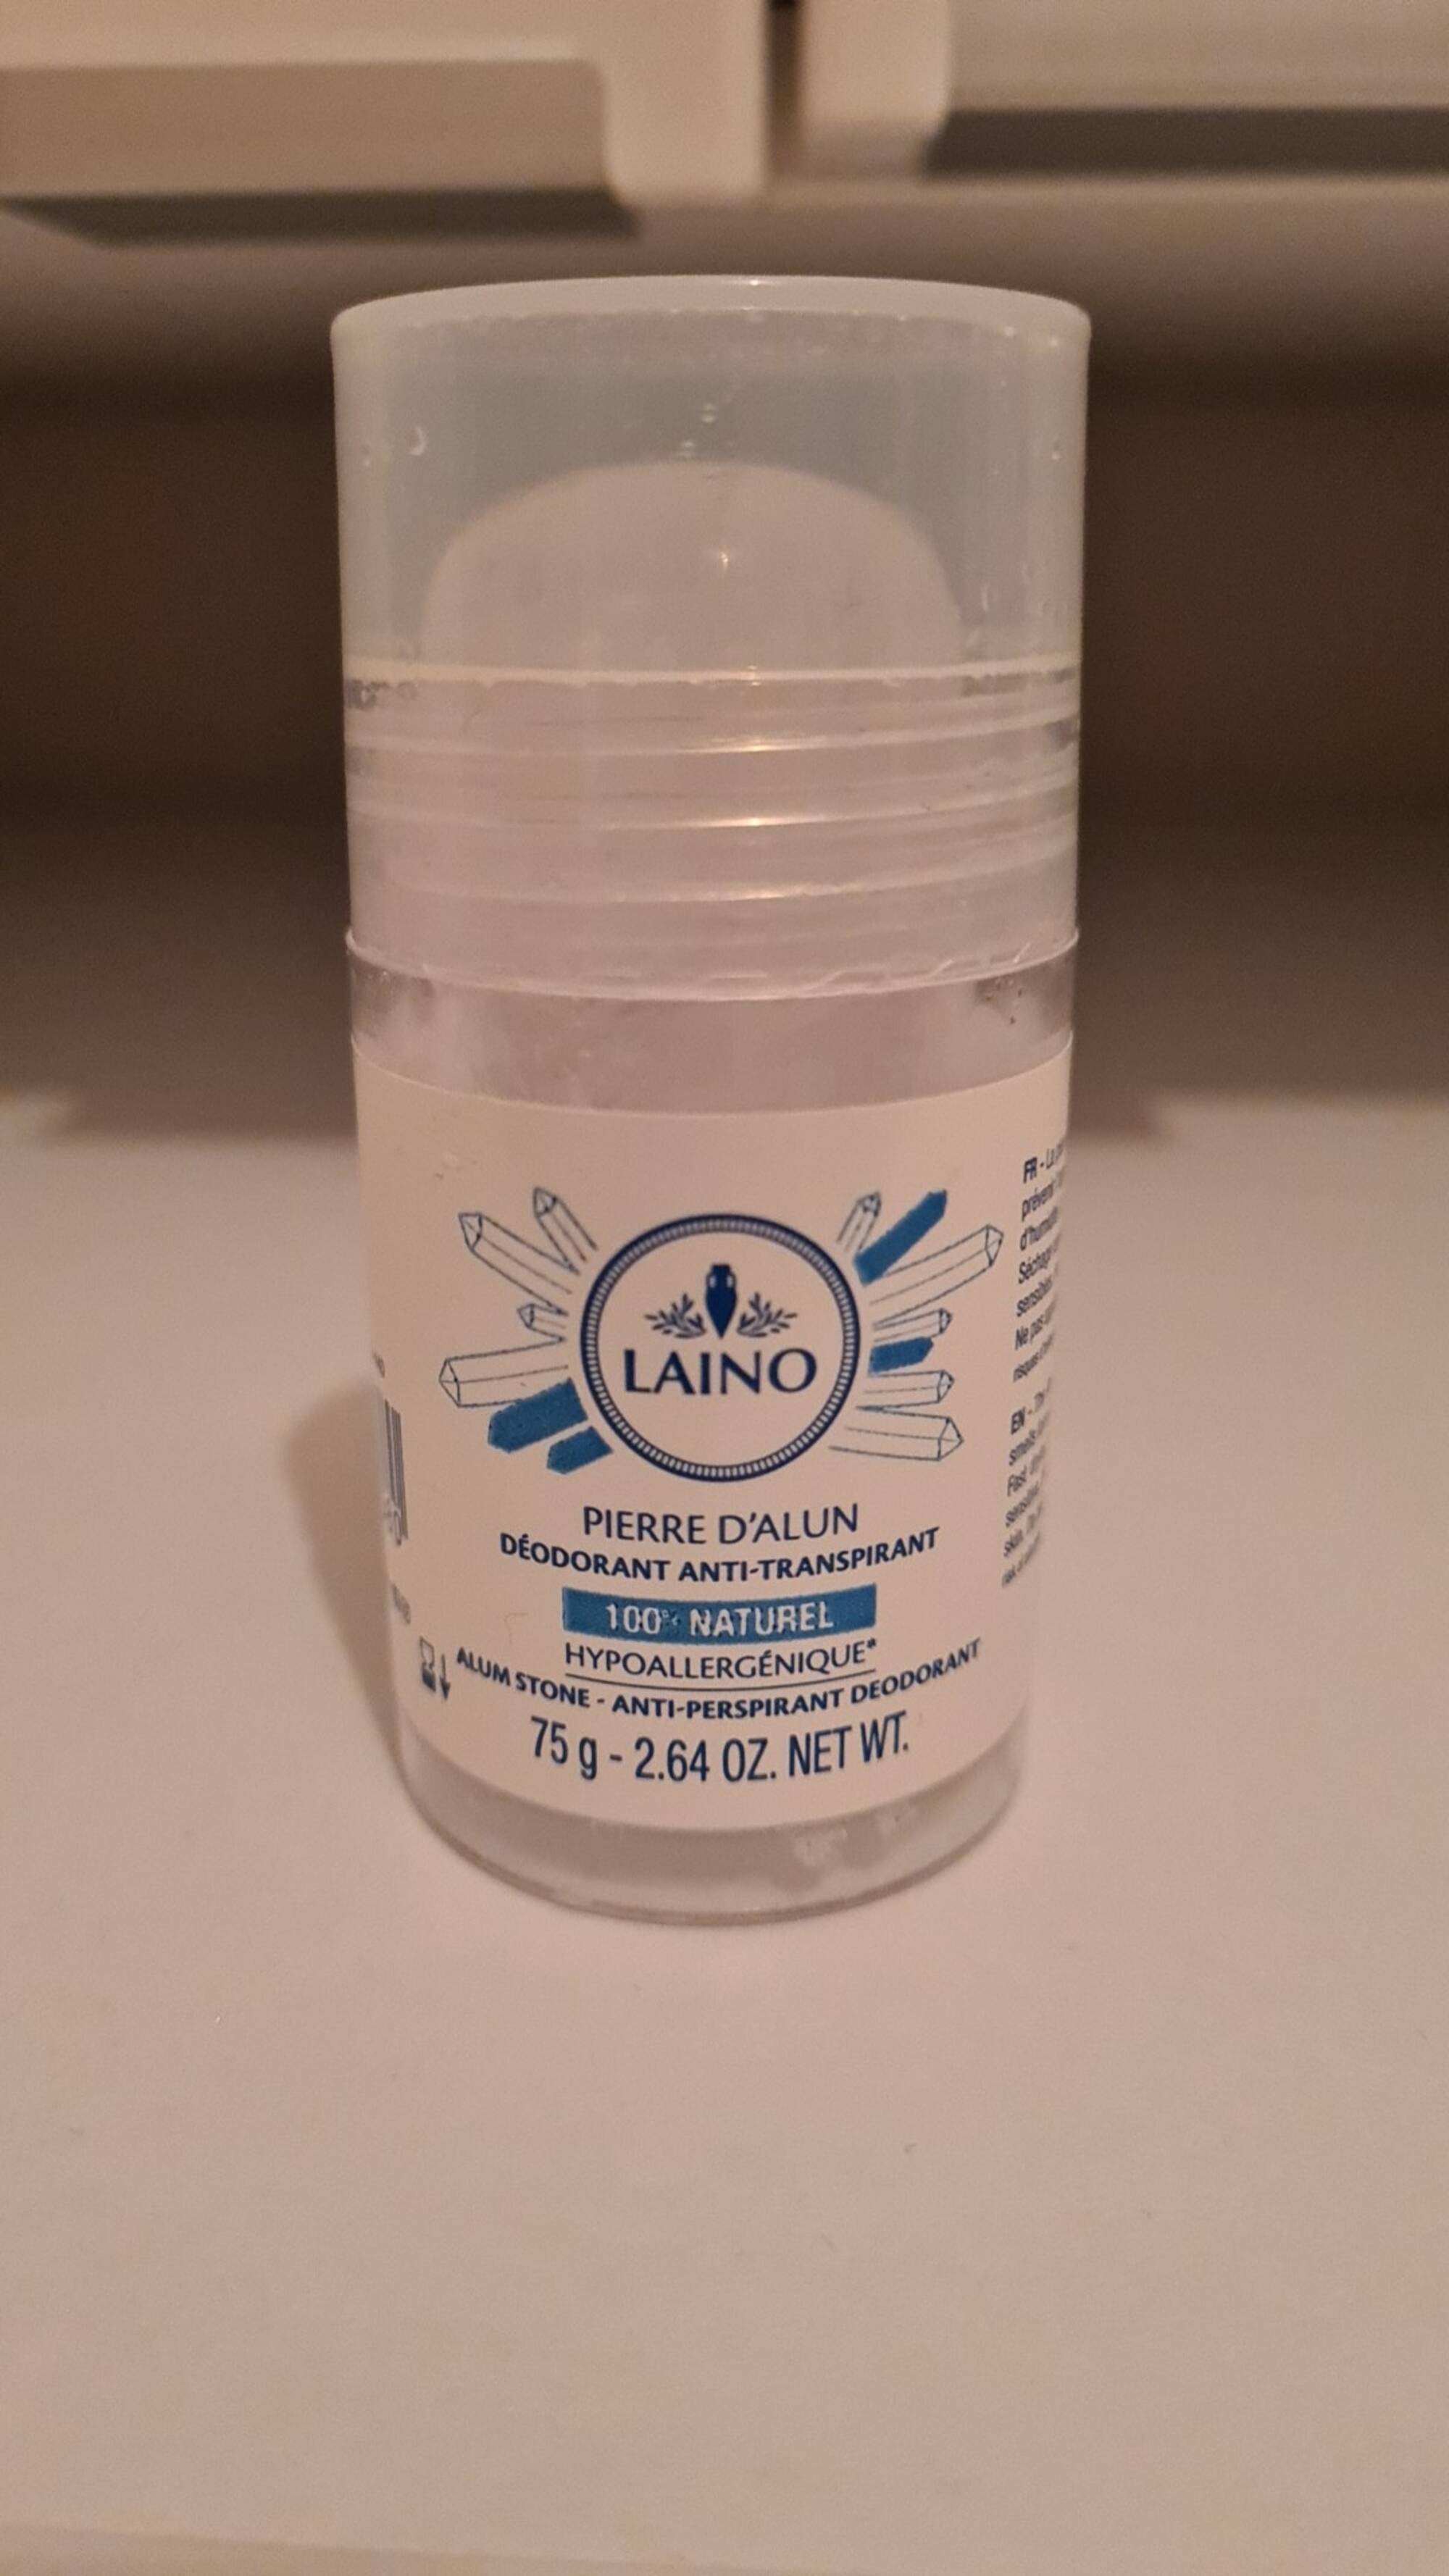 LAINO - Pierre d'alun - Déodorant anti-transpirant